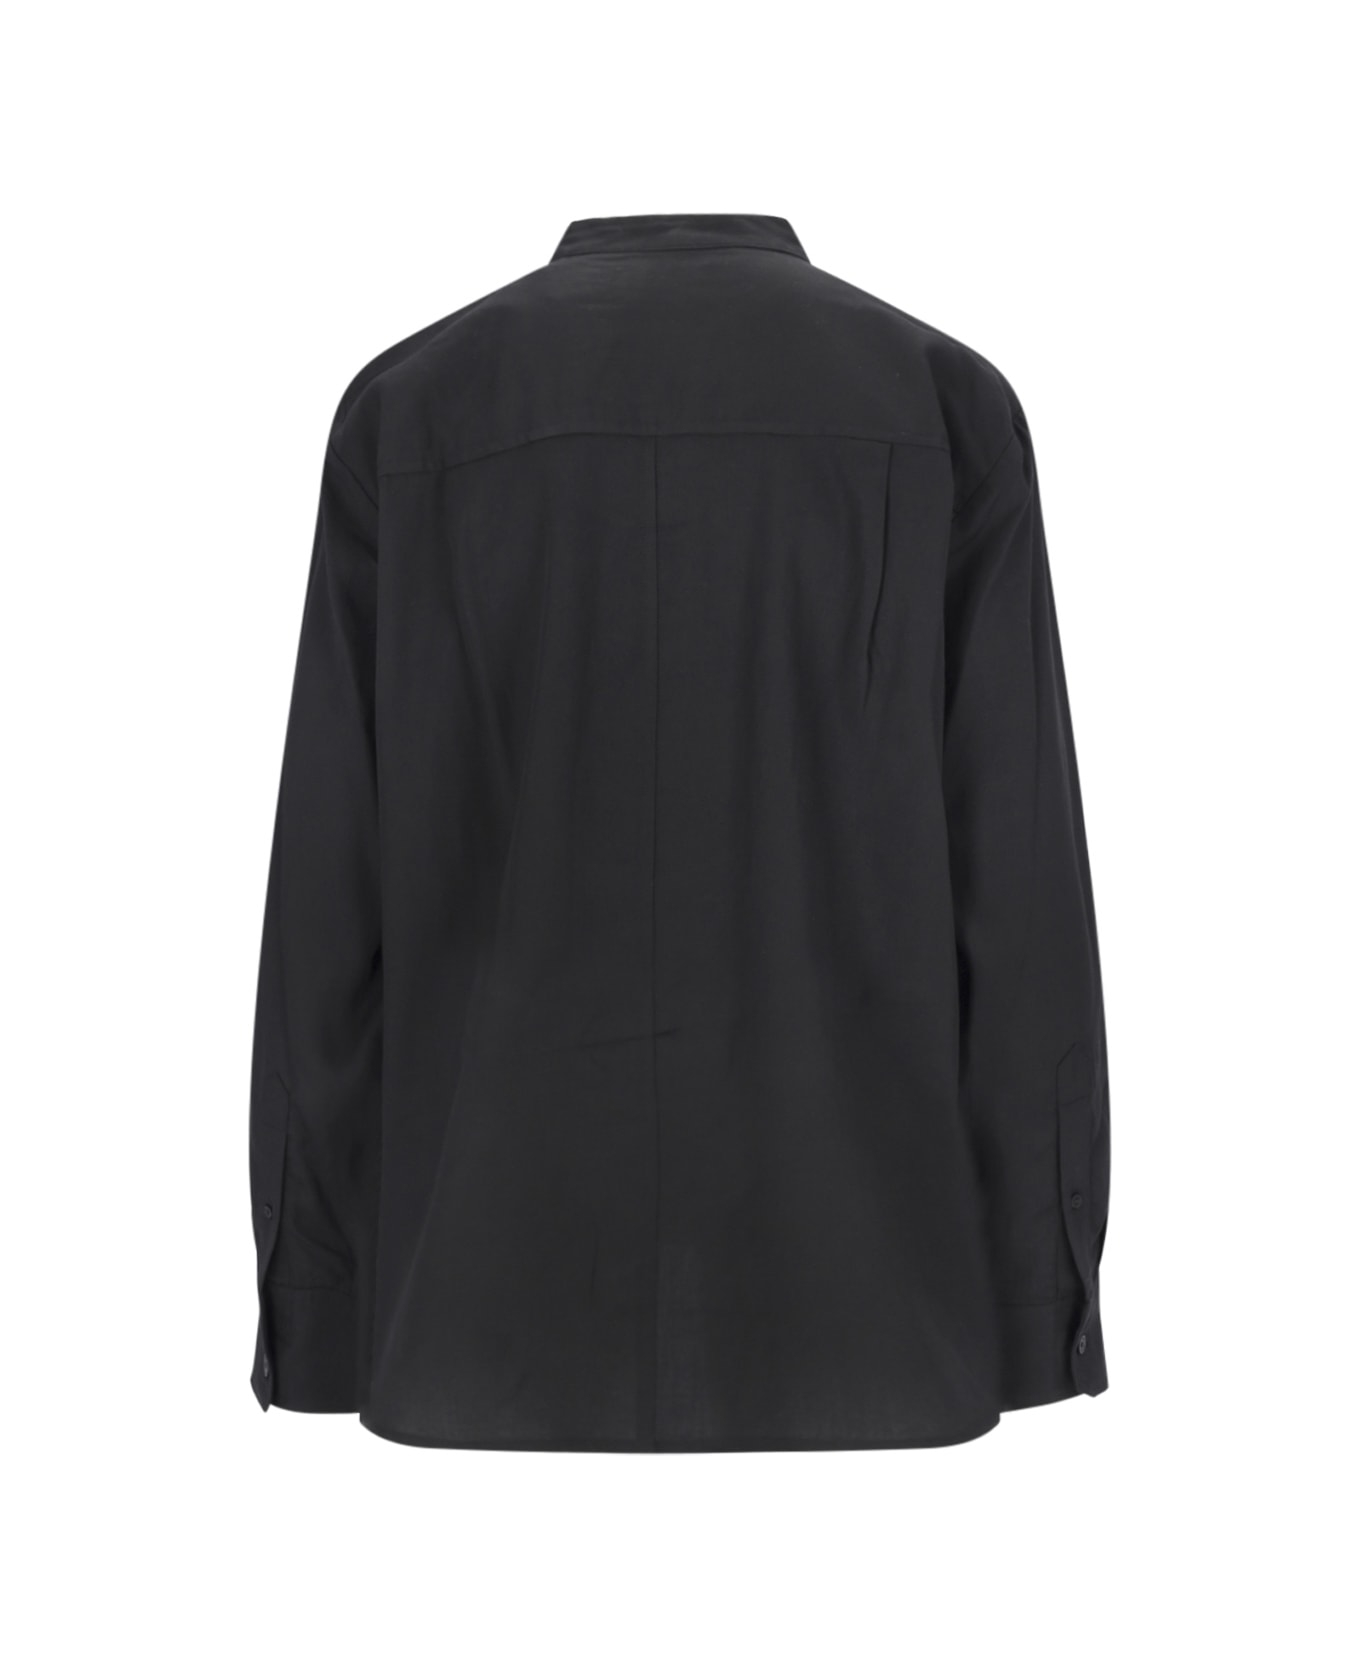 Marant Étoile Embroidered Shirt - Black  